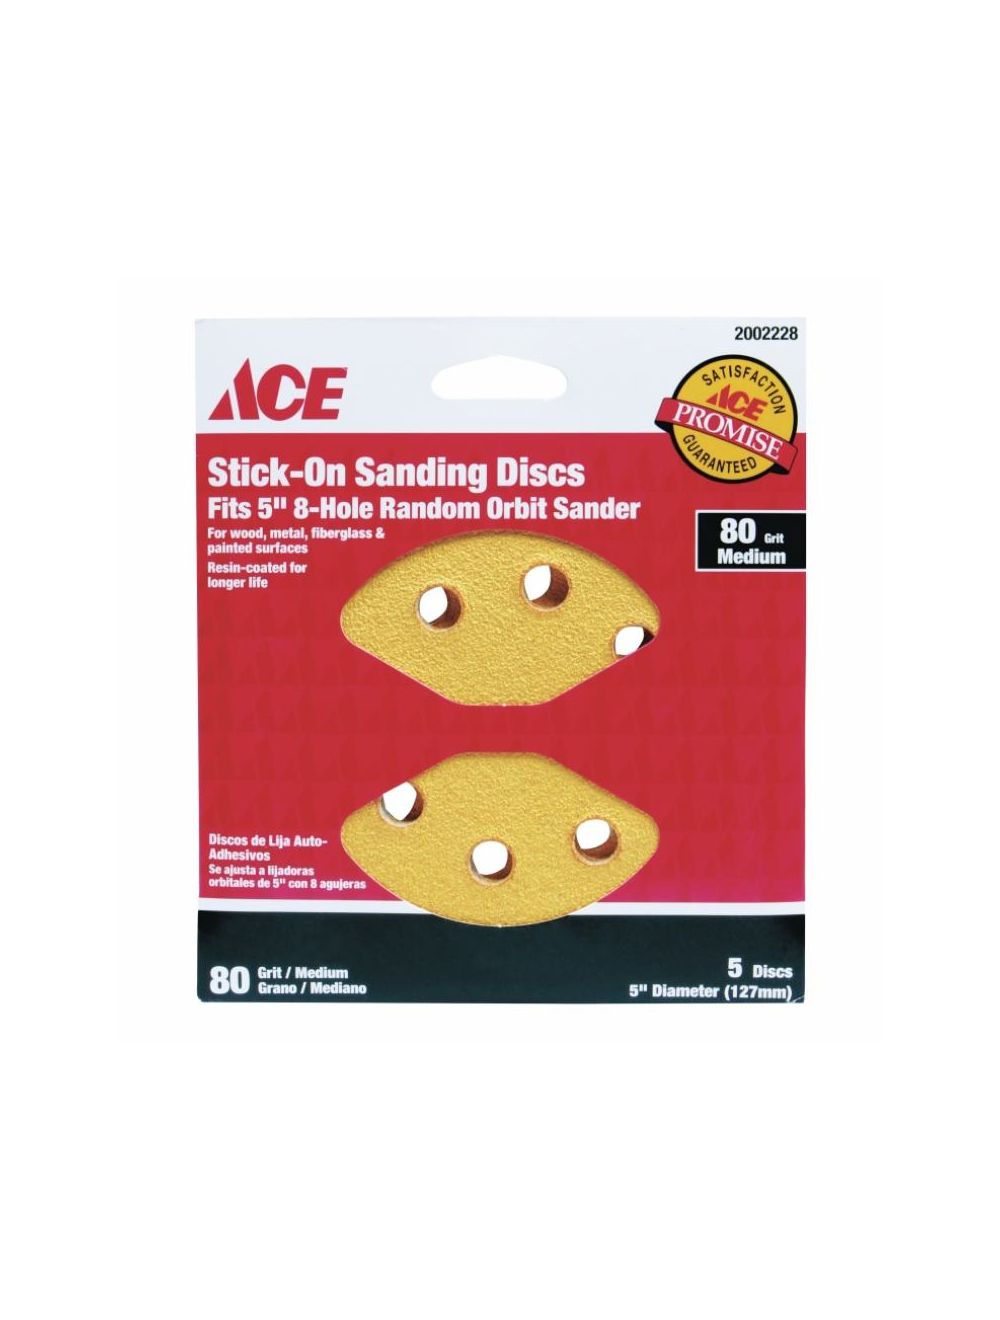 ACE Stick-On Sanding Discs 80 Grit Medium, 5 Discs, # 2002228 *New*